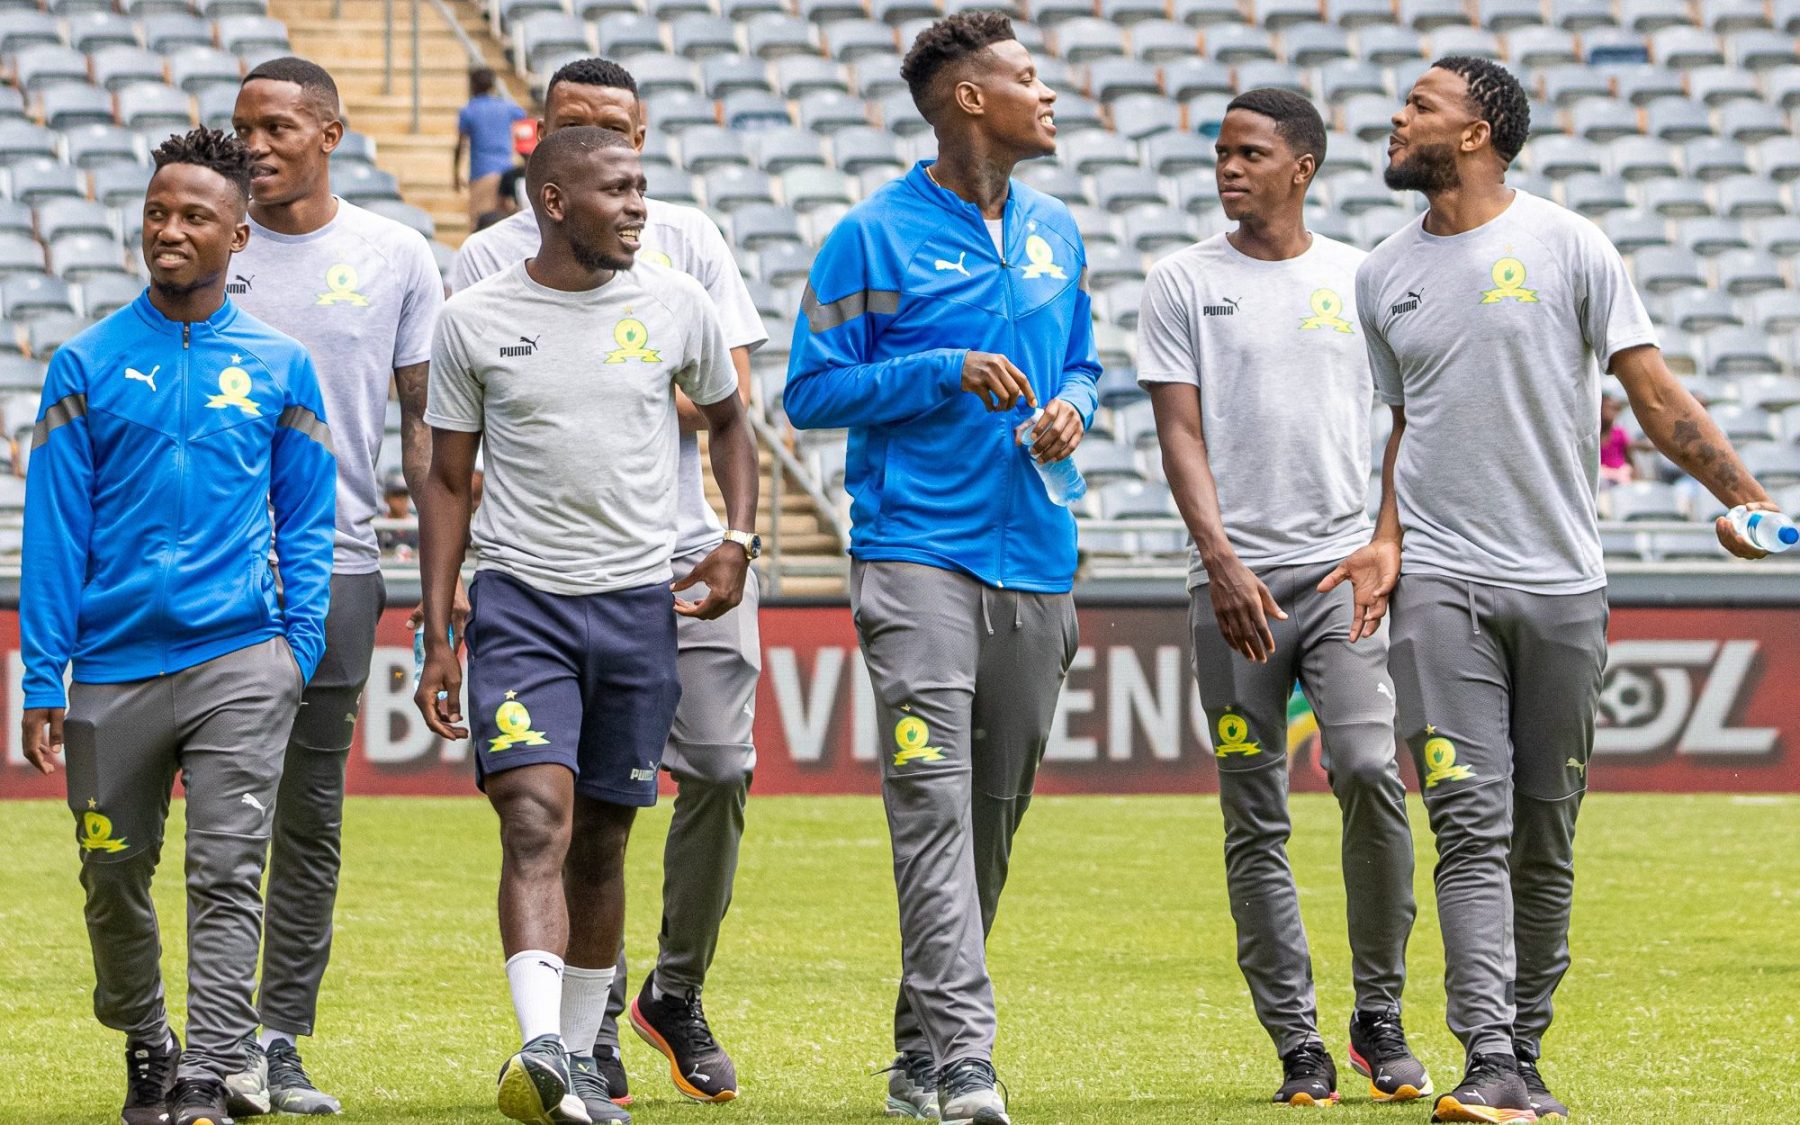 Mbule is back in the Sundowns squad